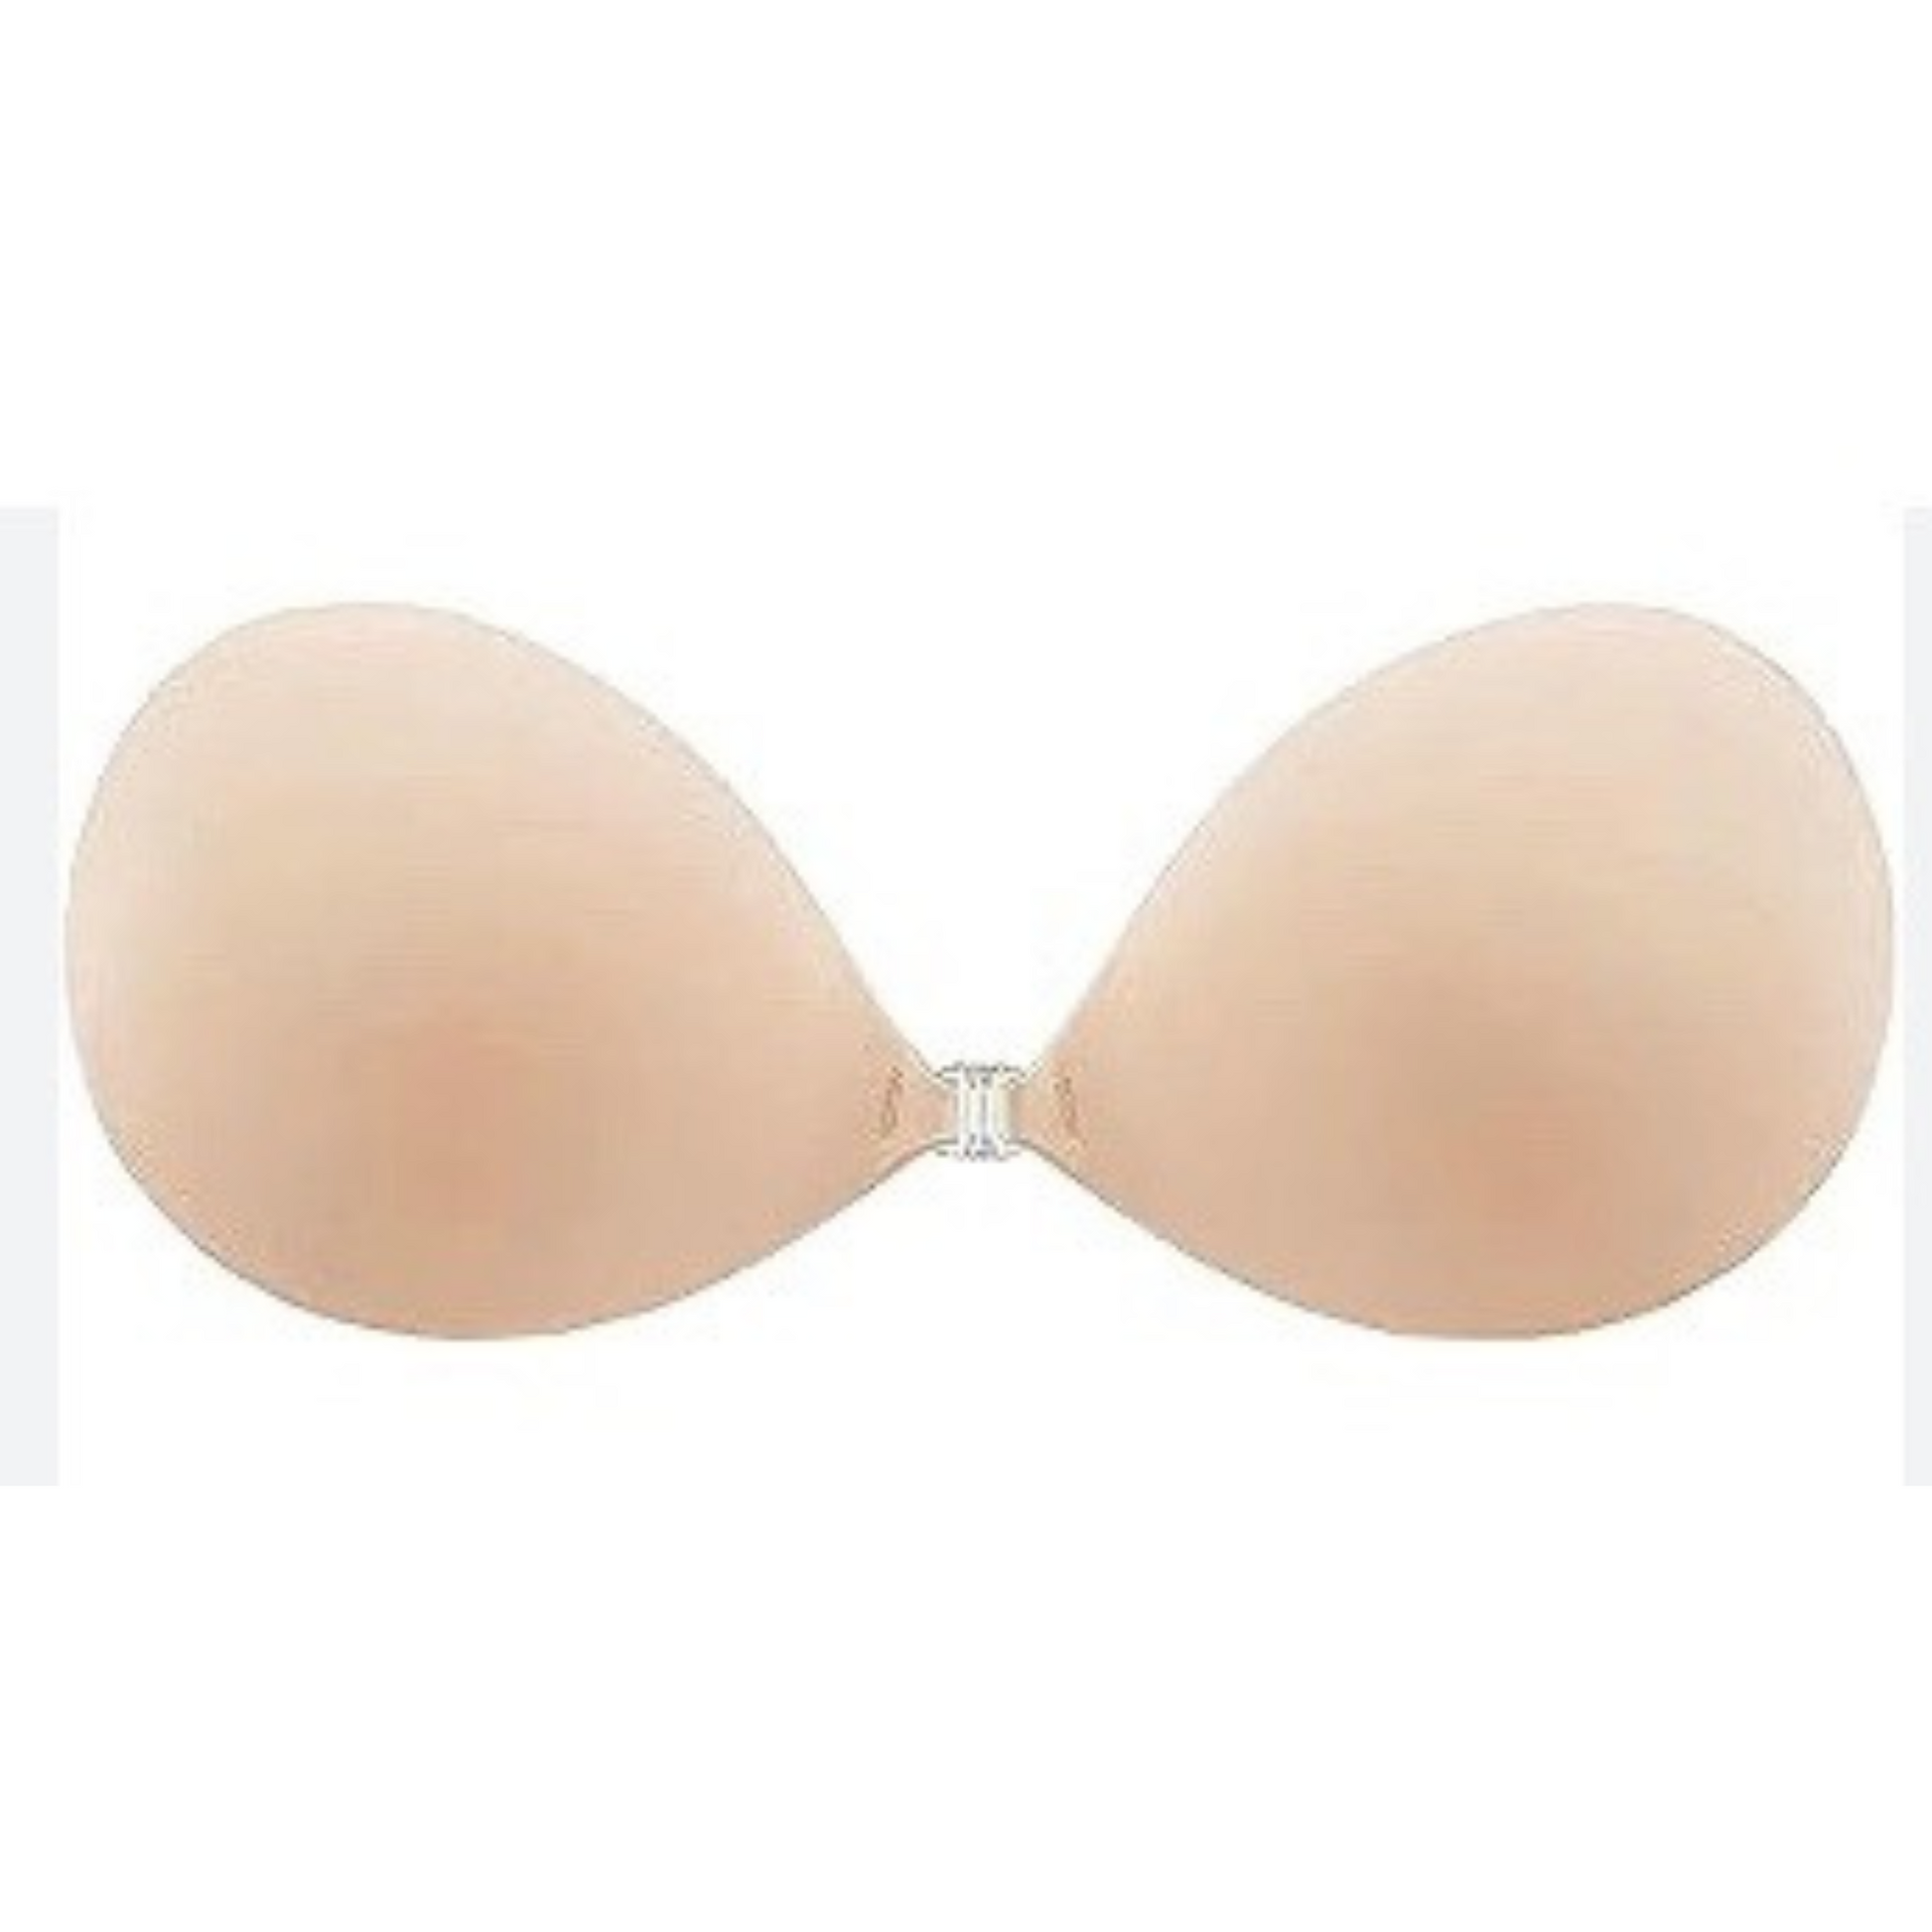 Nude color cloth adhesive bra 